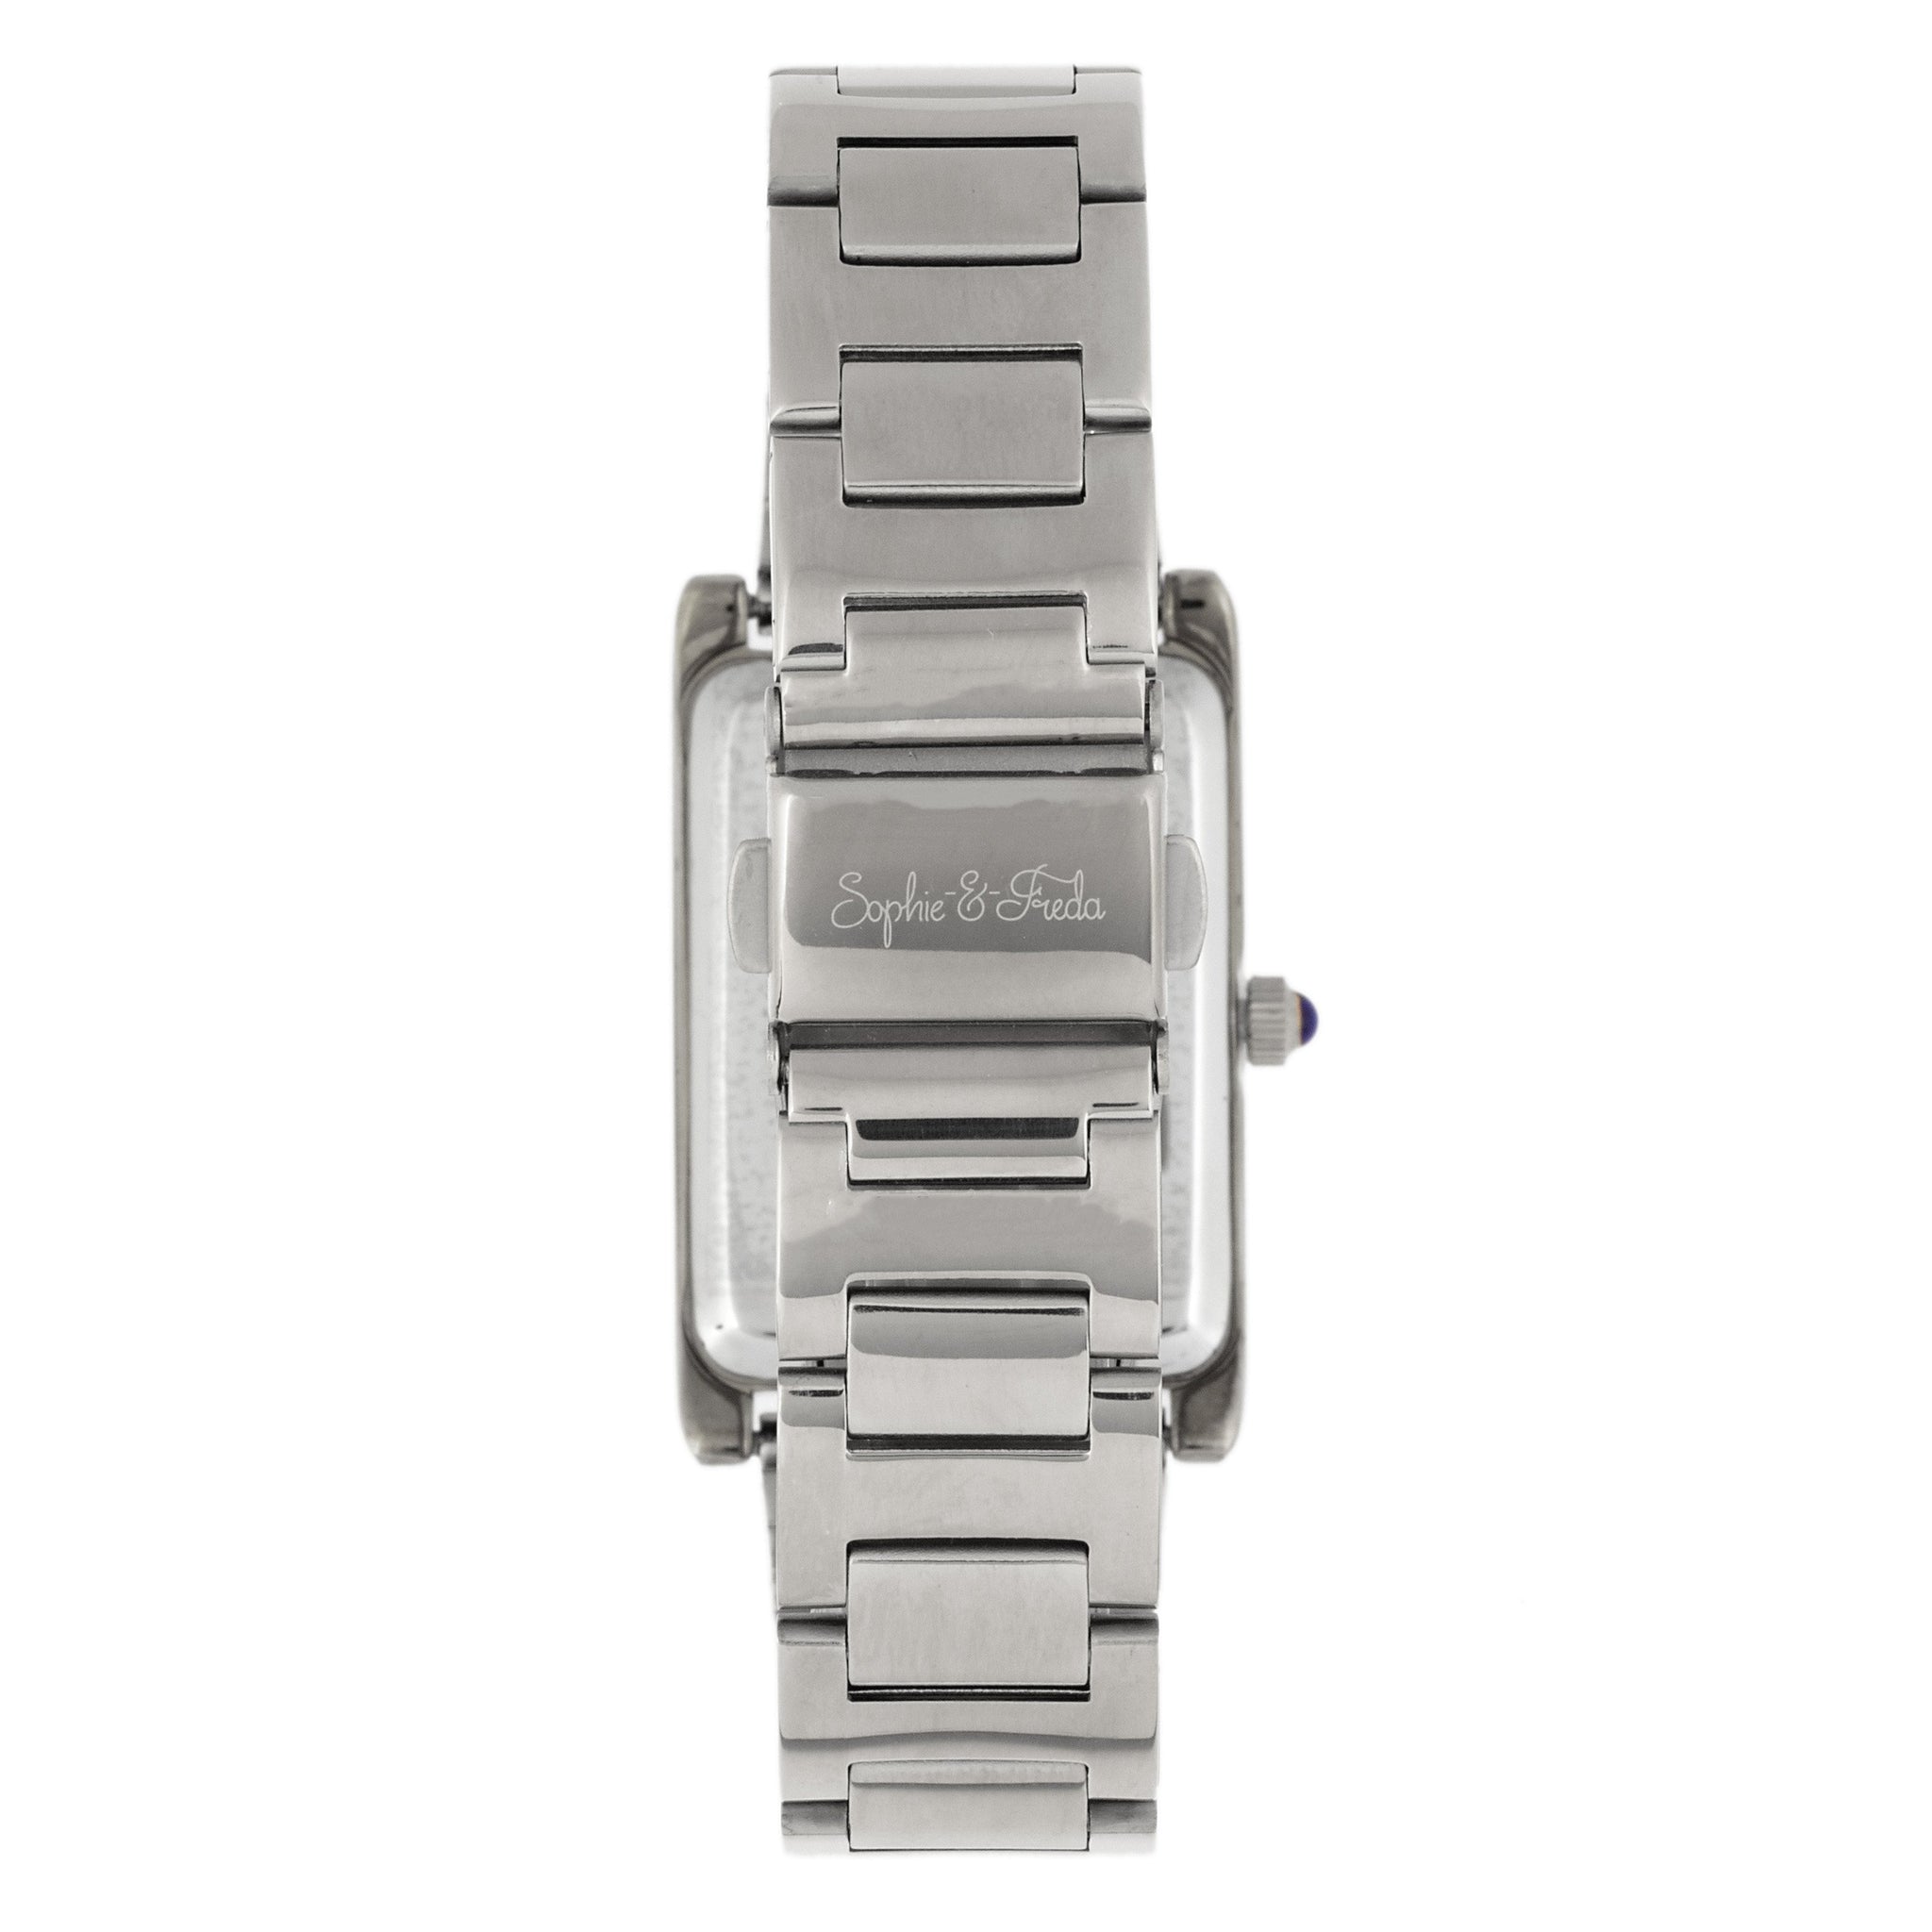 Sophie and Freda Wilmington Bracelet Watch w/Swarovski Crystals - Silver  - SAFSF5601